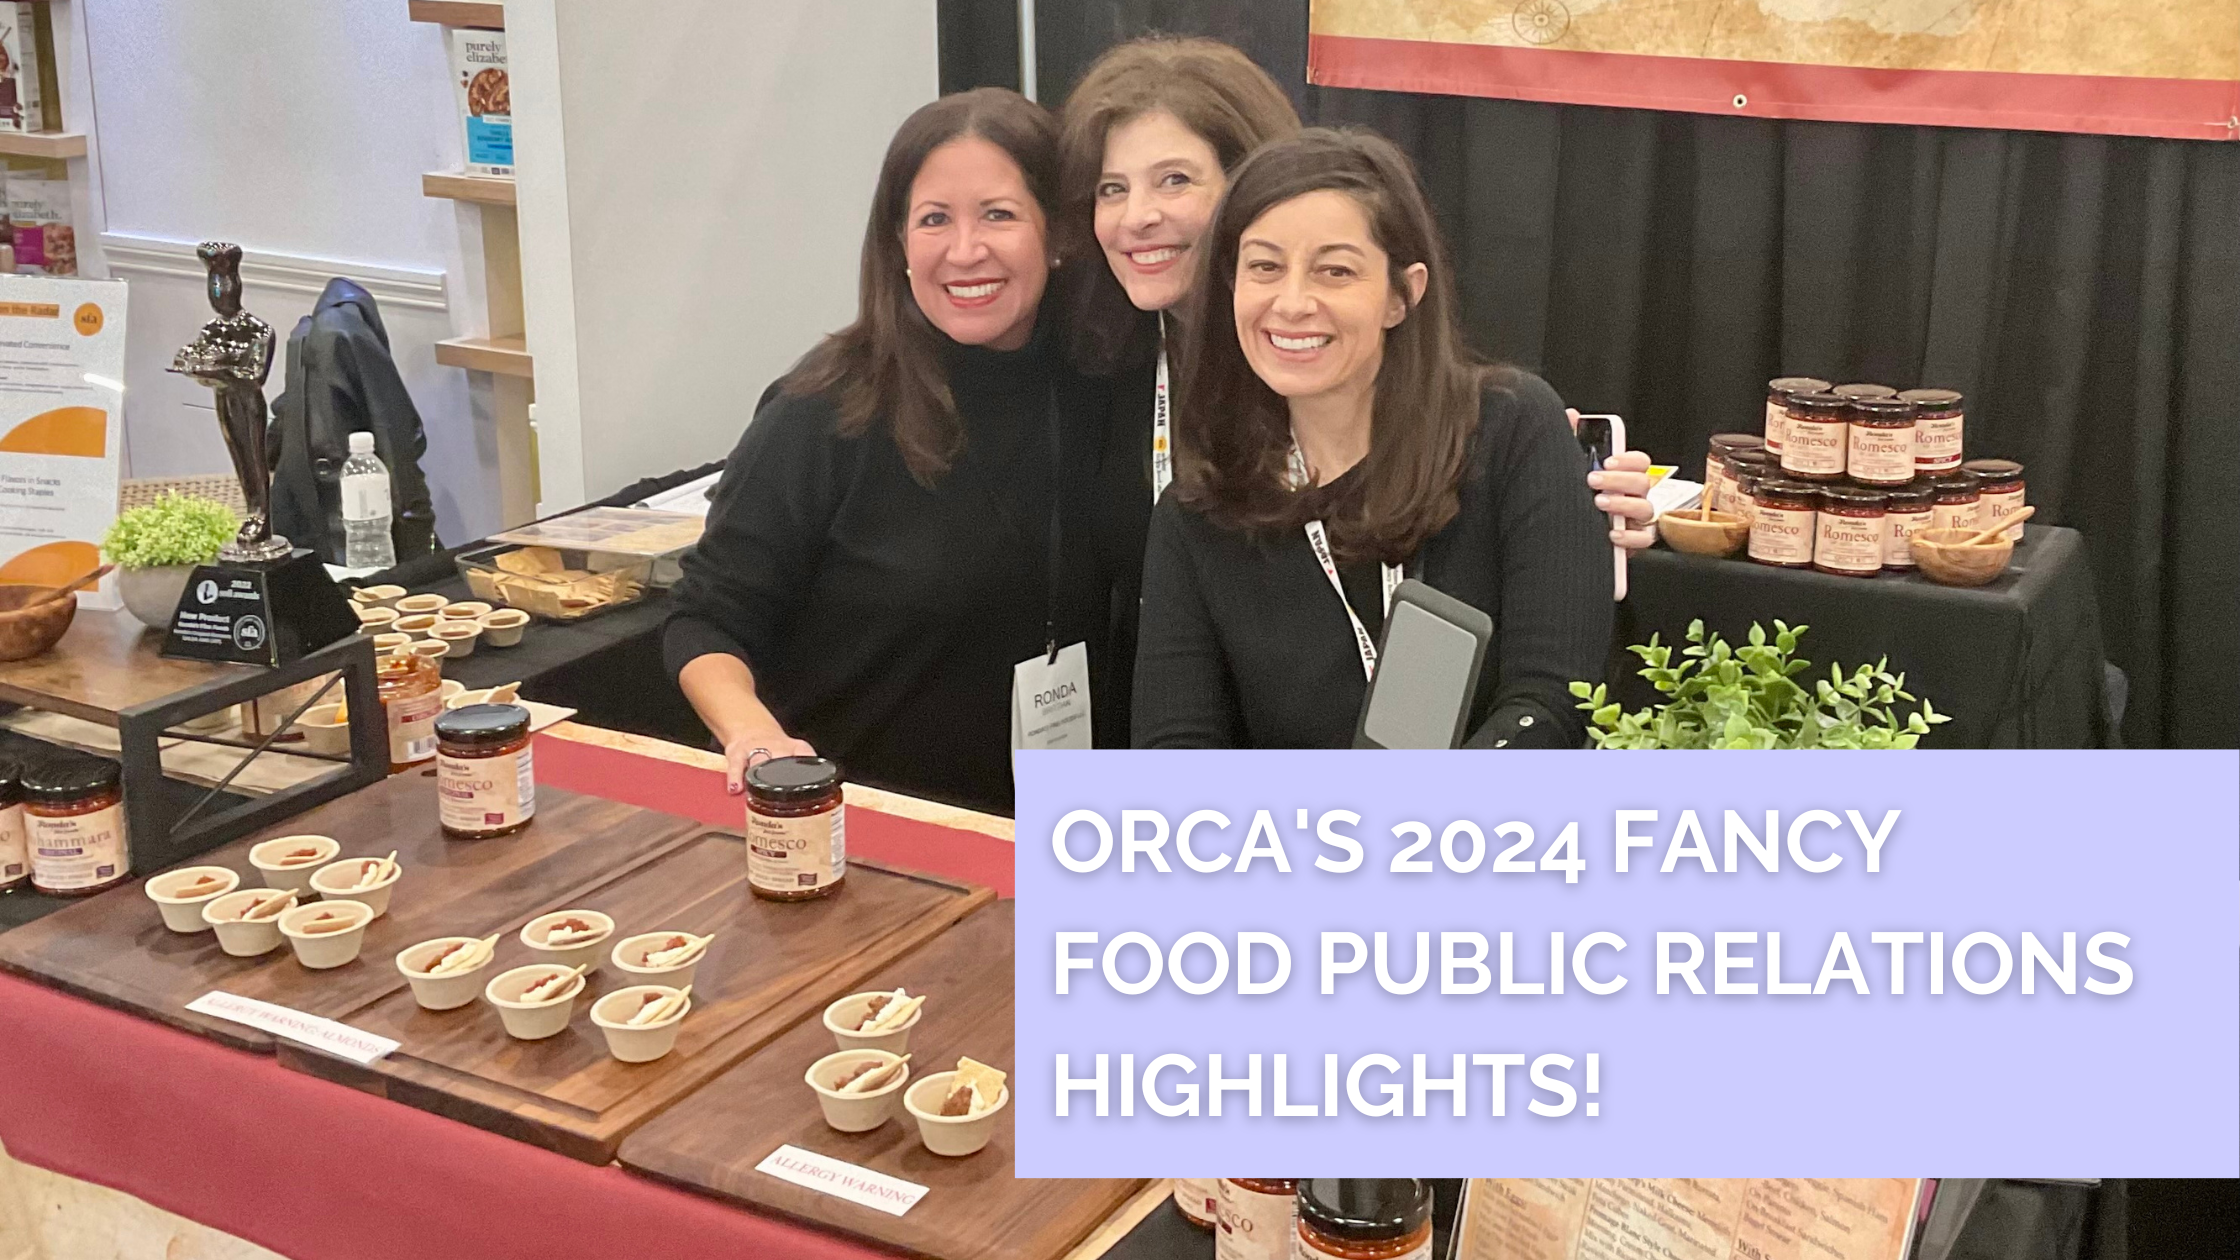 Orca Communications 2024 Fancy Foods Public Relations Features